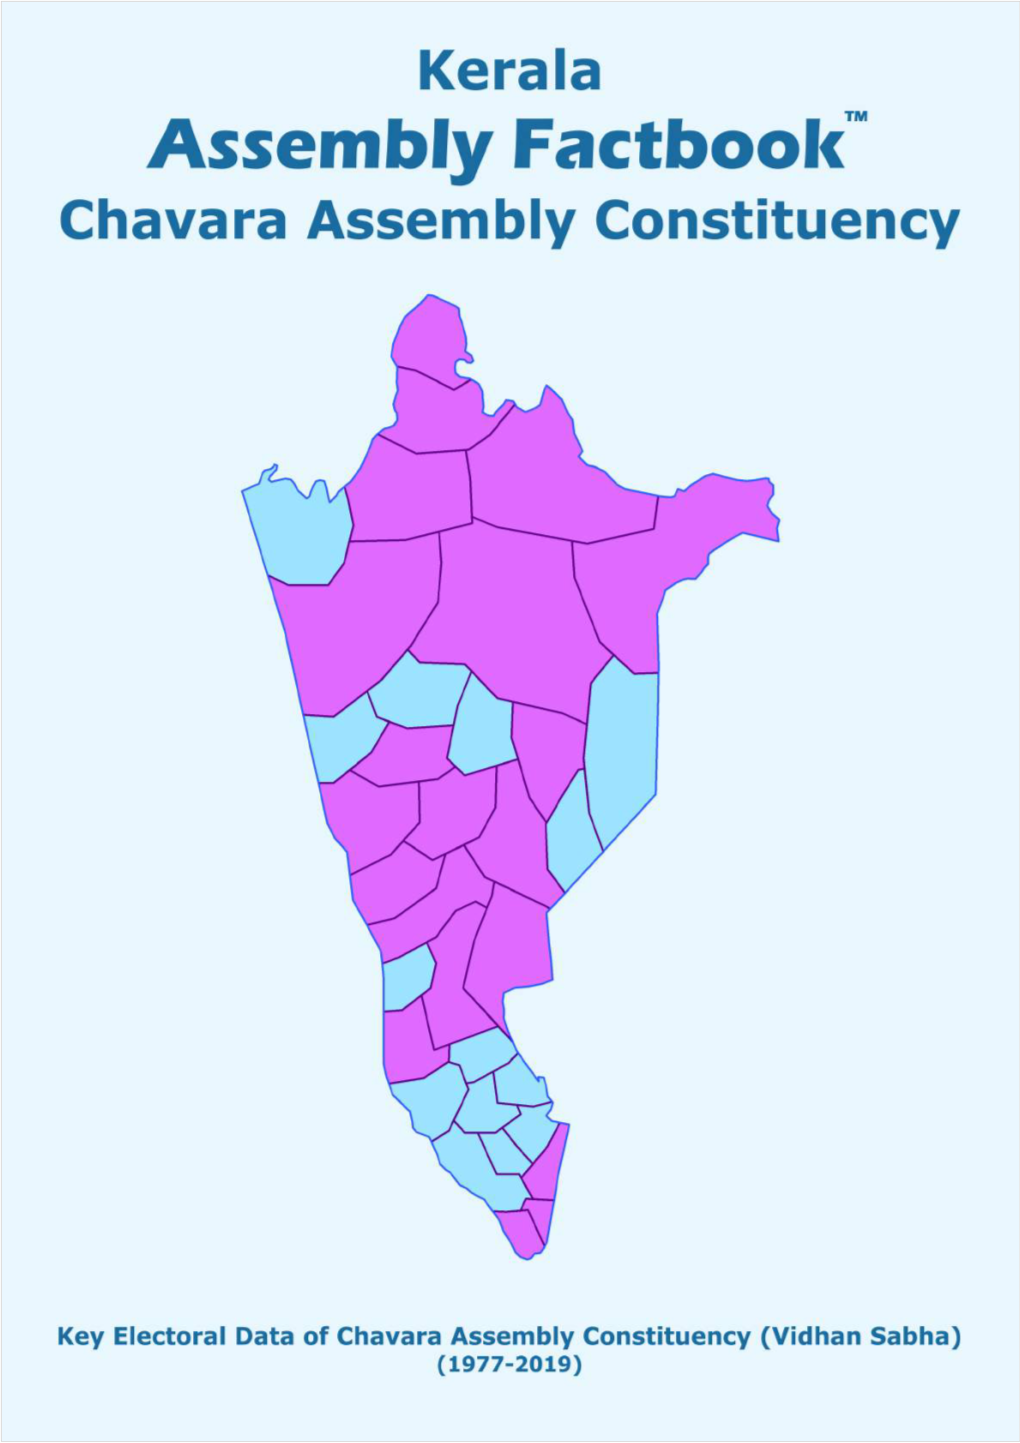 Chavara Assembly Kerala Factbook